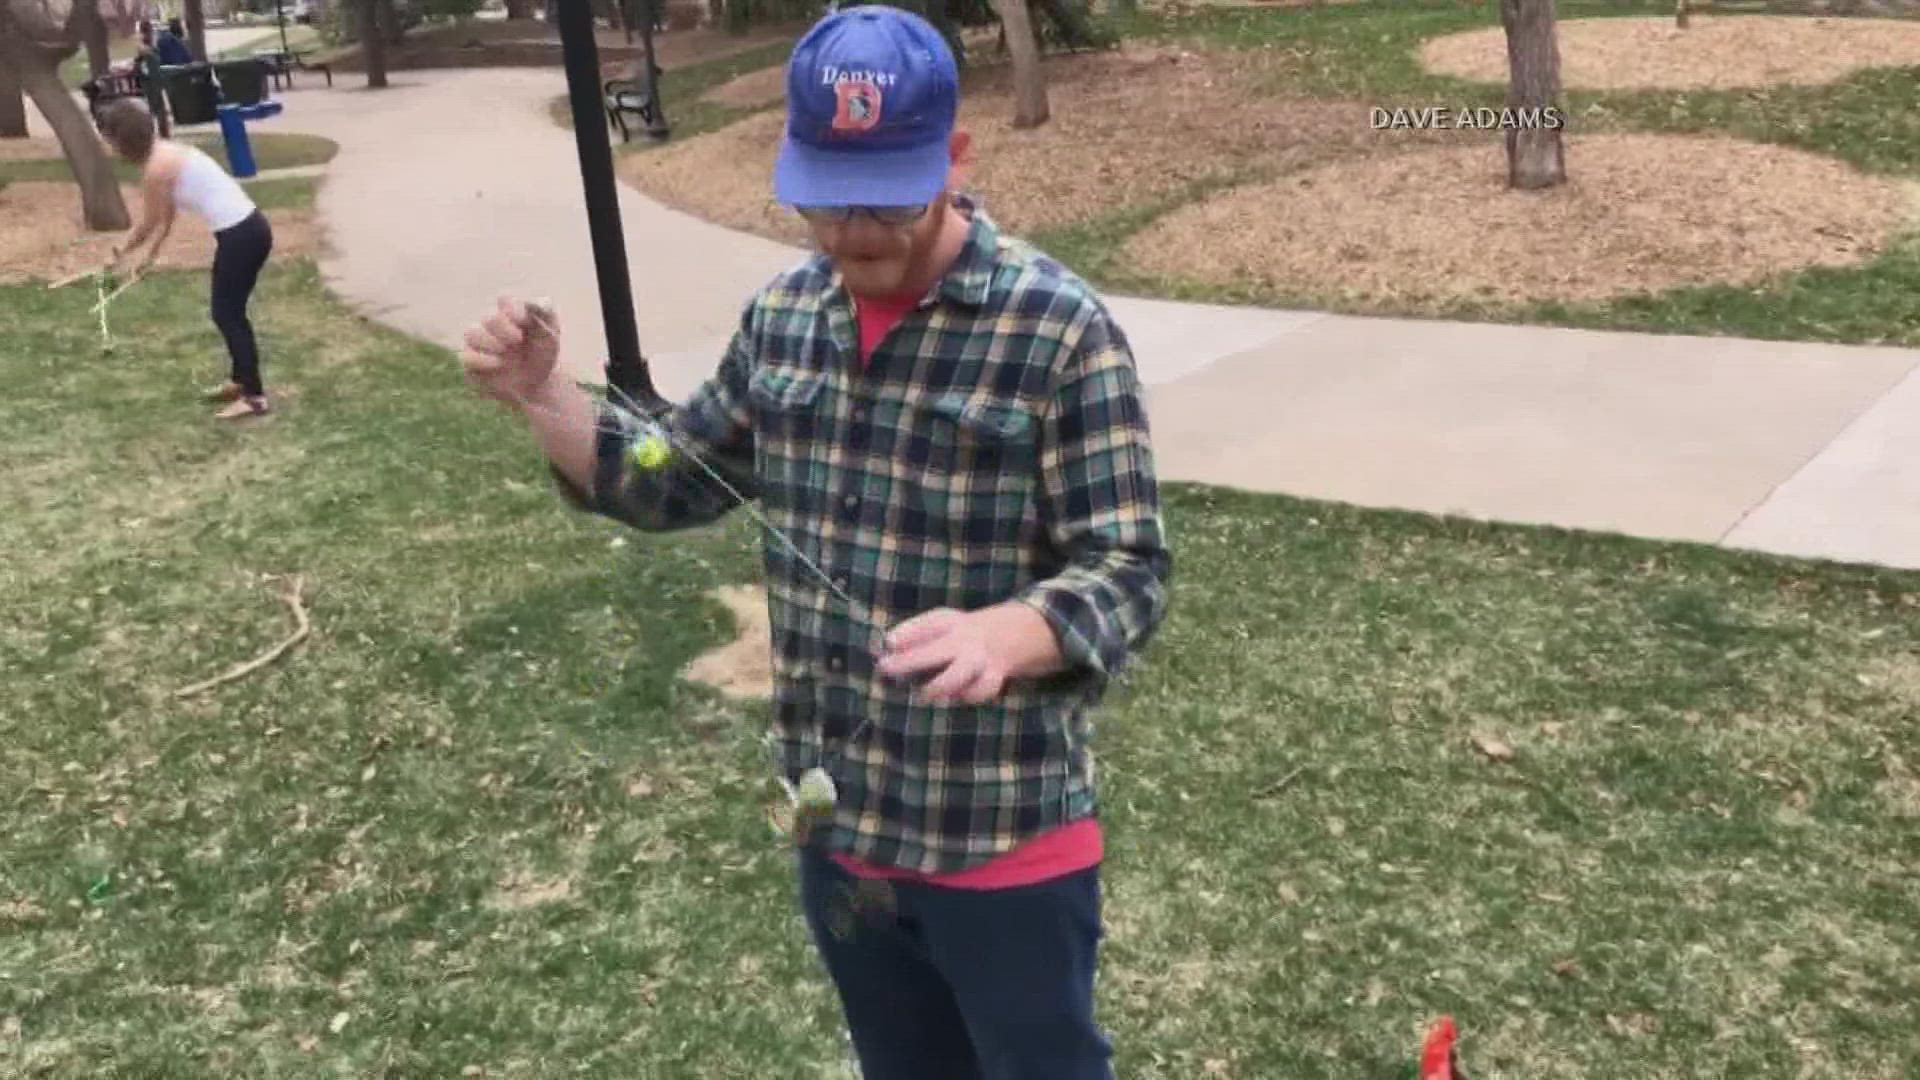 Dave Adams with the Mile High Yo-Yo Club stops by the 9NEWS backyard to give Cory and Gary a crash course in yo-yo tricks.